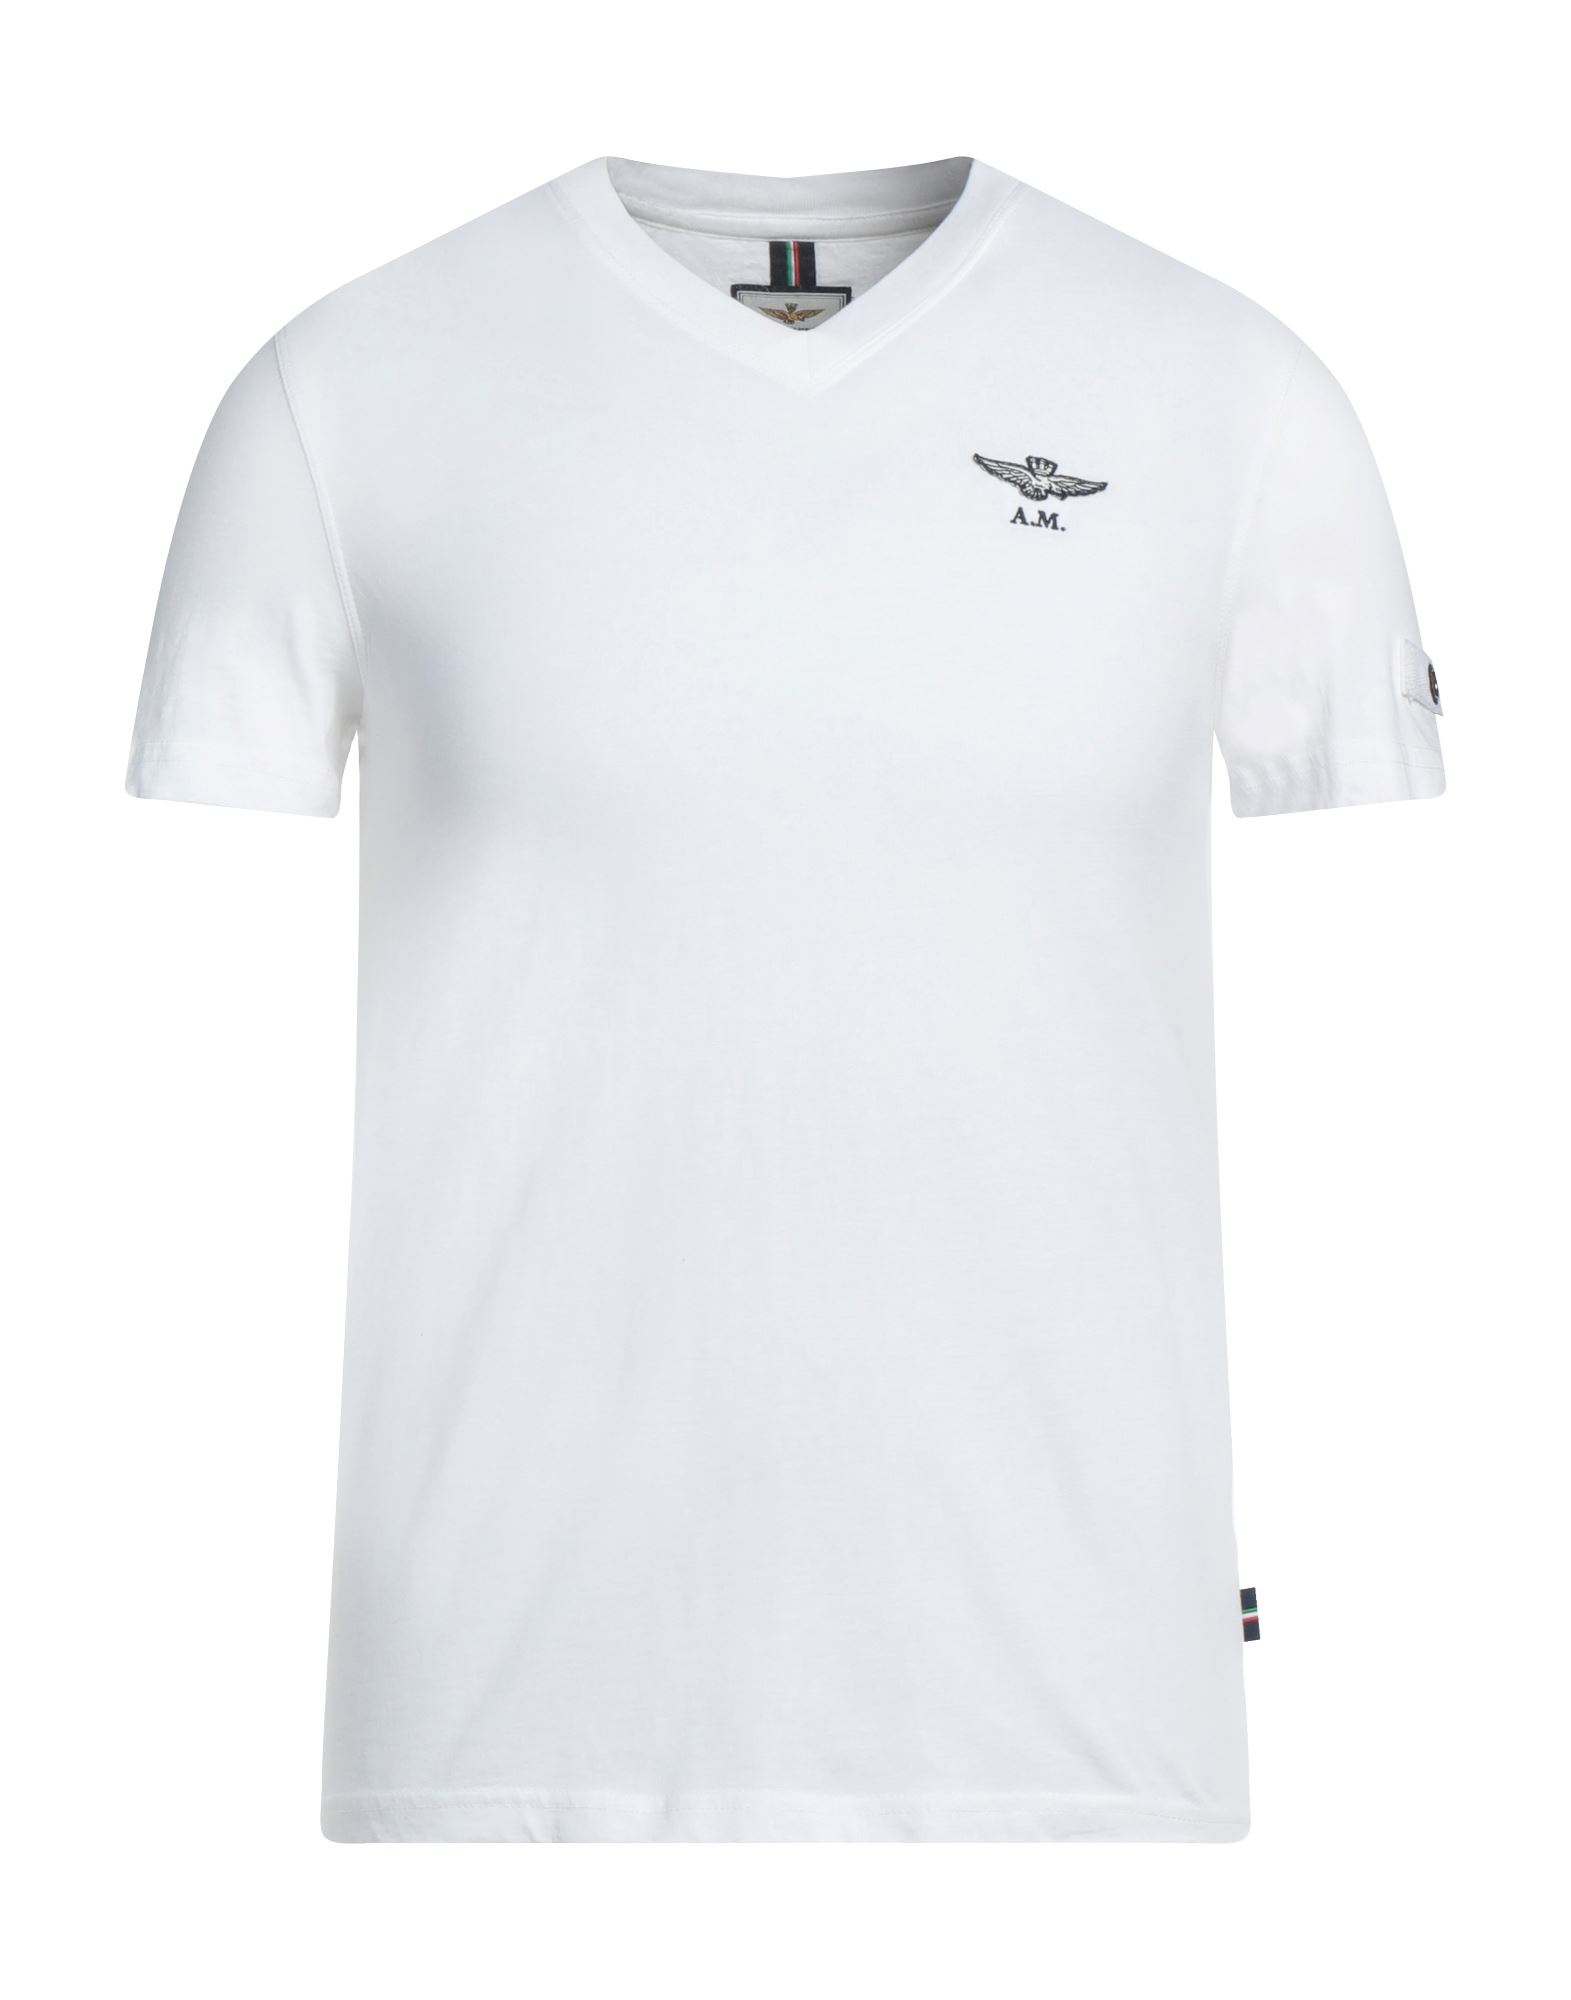 Aeronautica Militare T-shirts In White